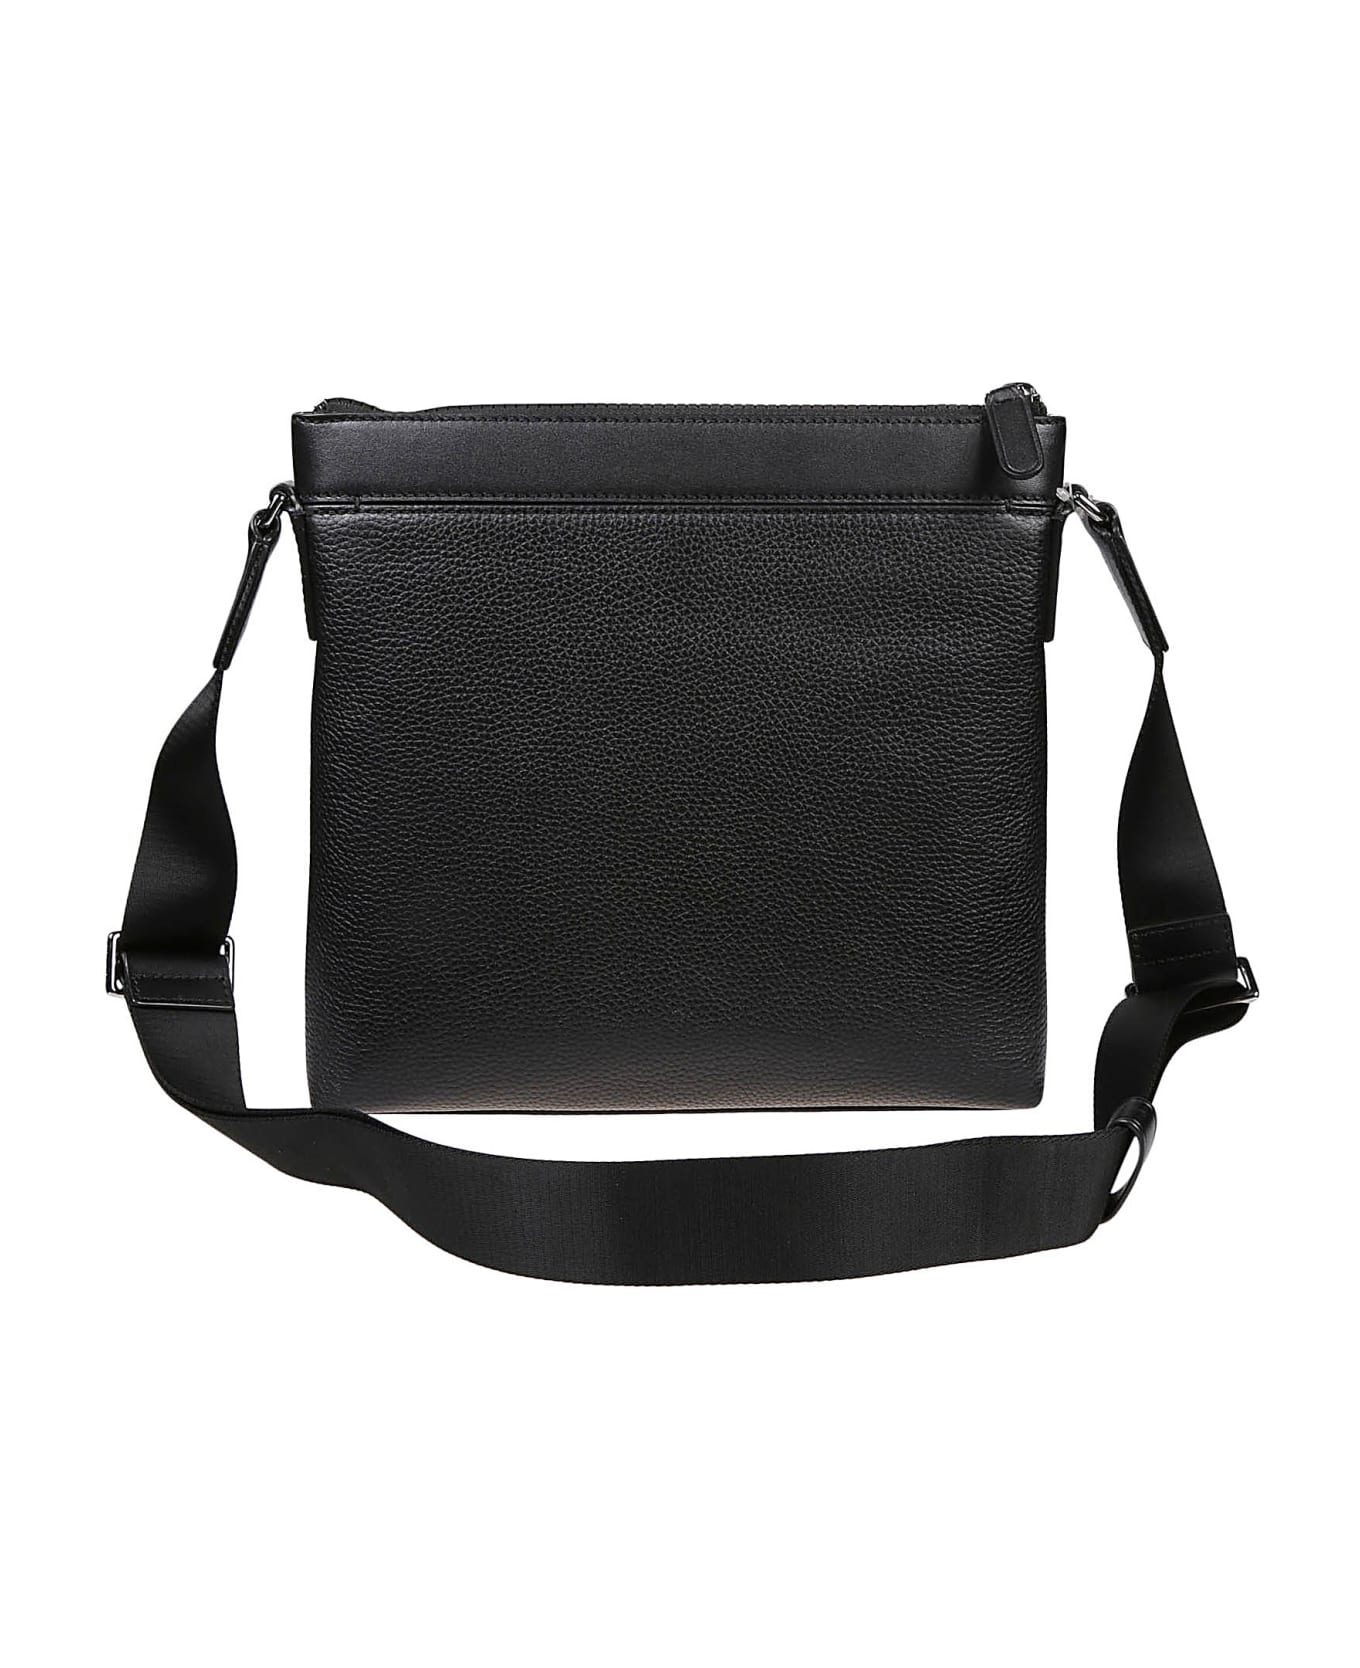 Michael Kors Greyson Messenger Bag - Black ショルダーバッグ